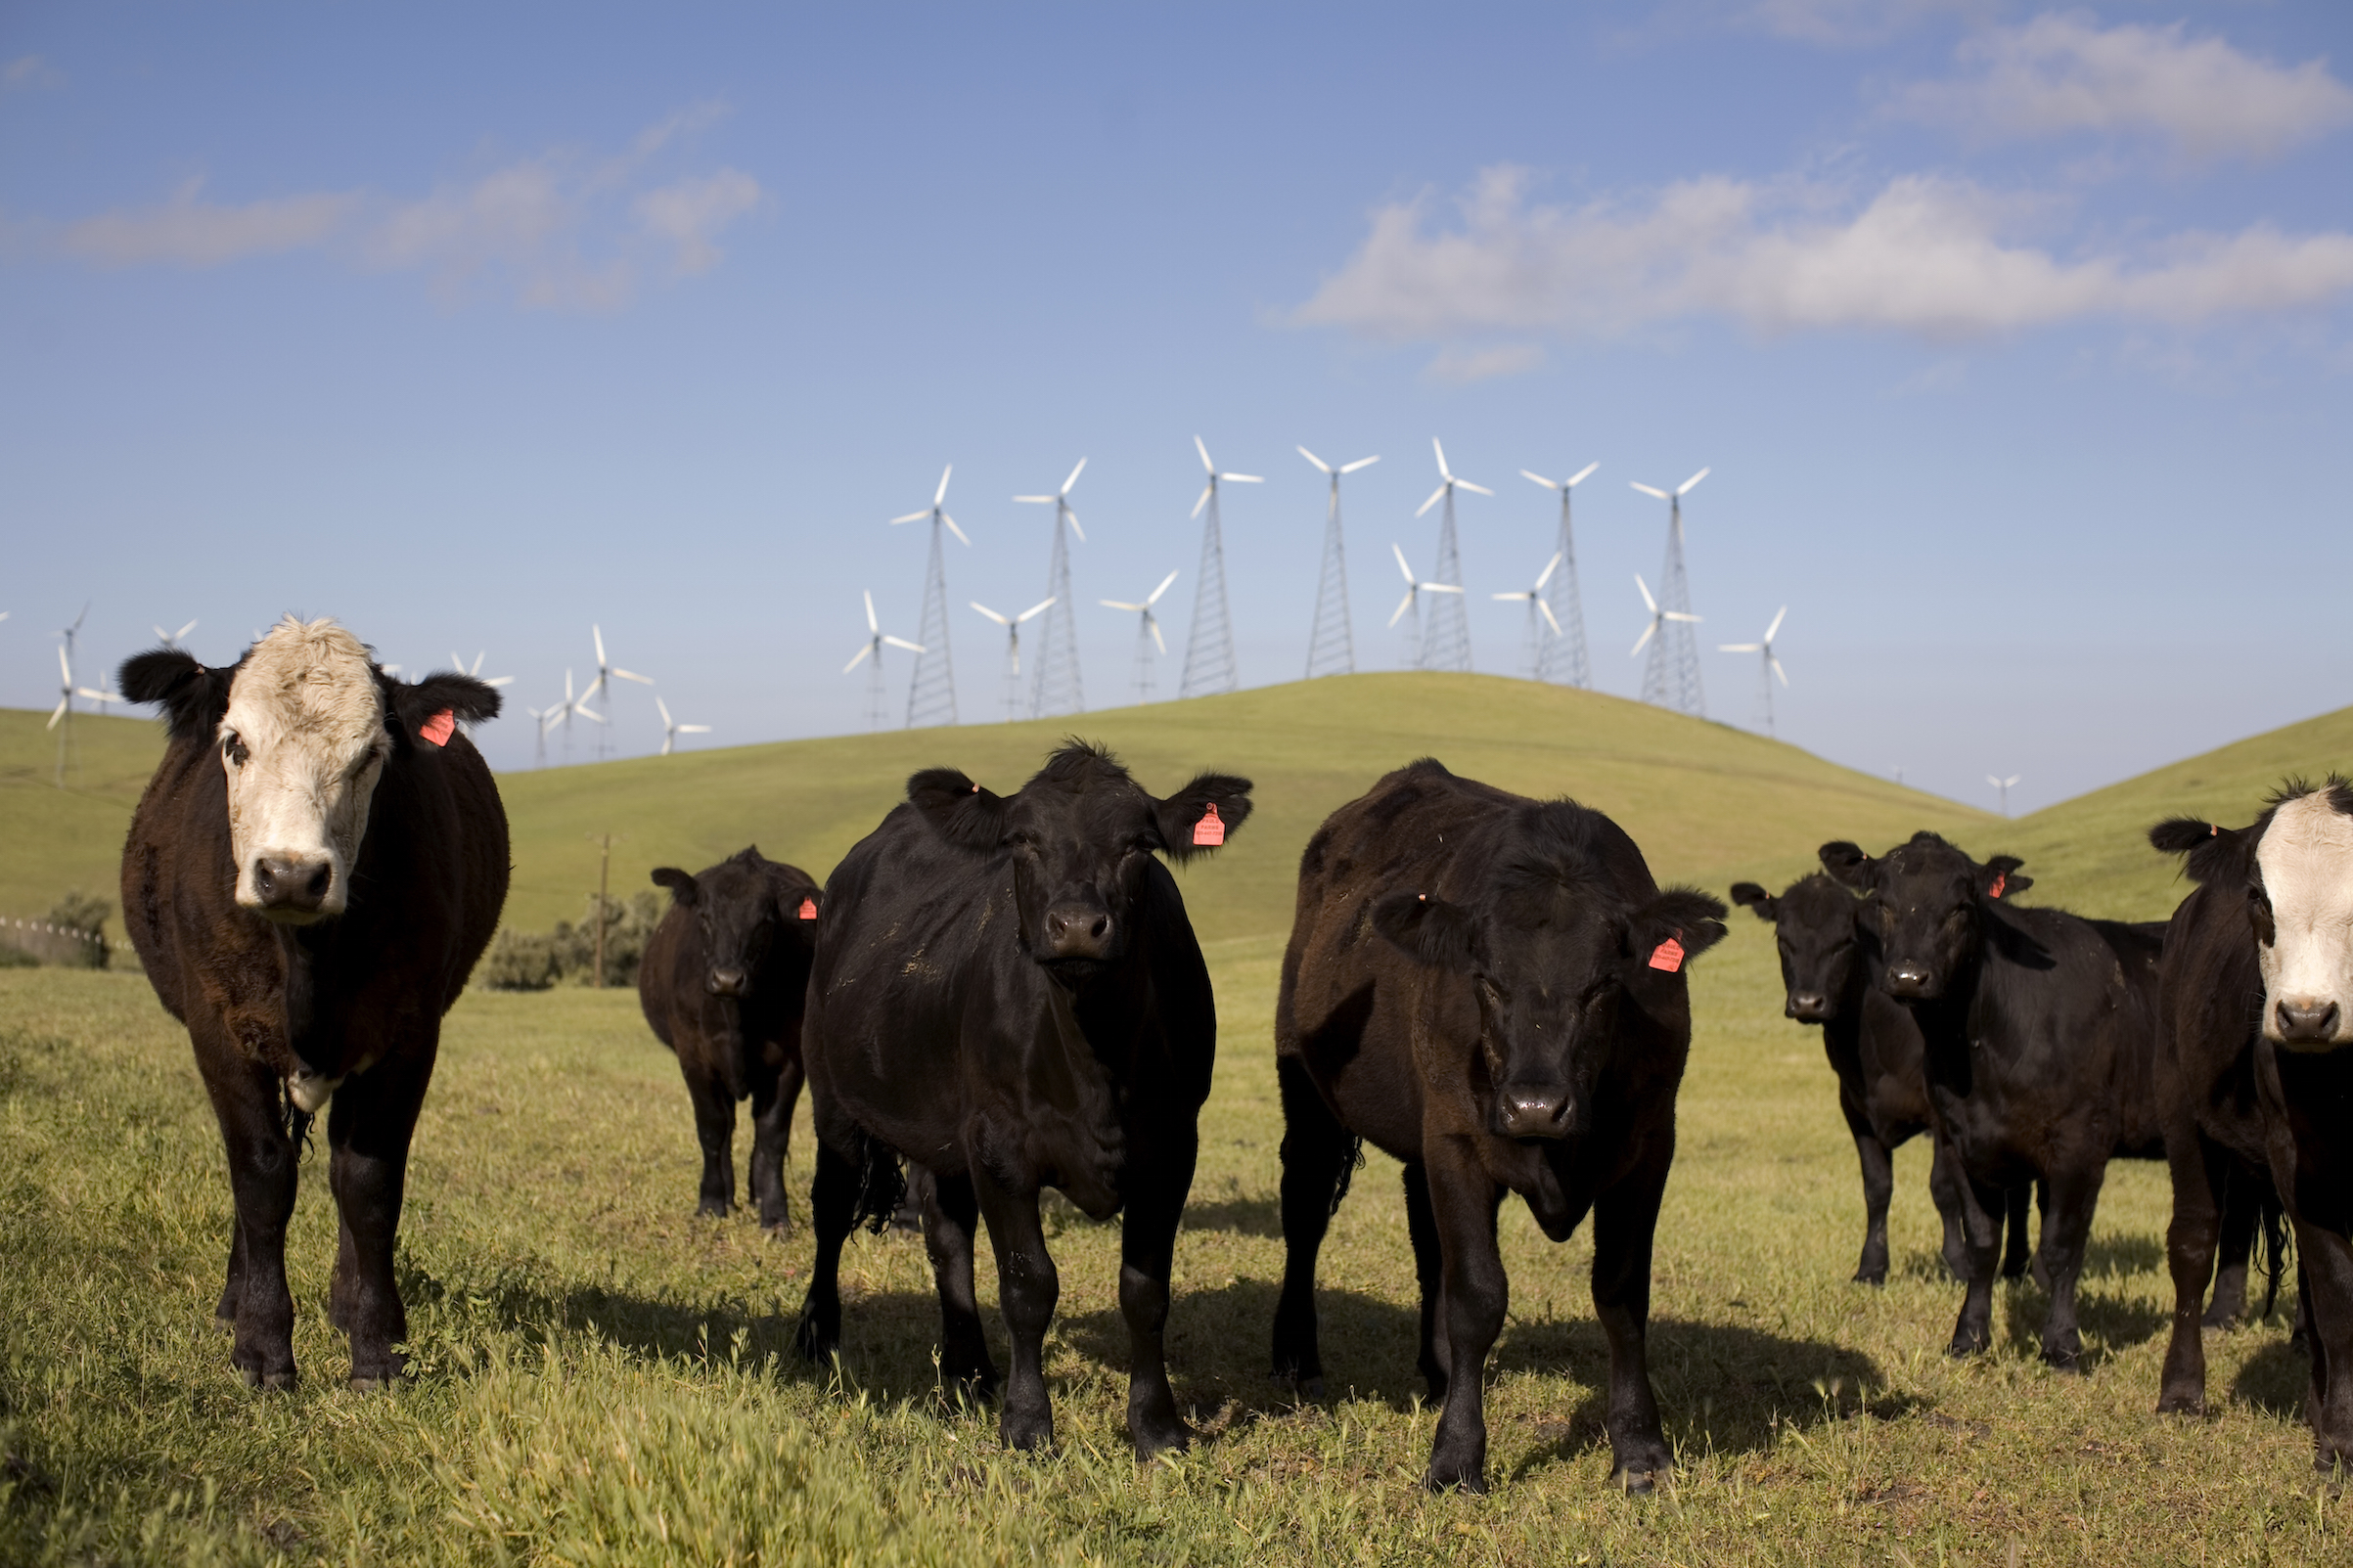 Beef cattle graze on a hillside below wind-power towers 50 miles east of San Francisco on April 14, 2008 (Robert Nickelsberg—Getty Images)